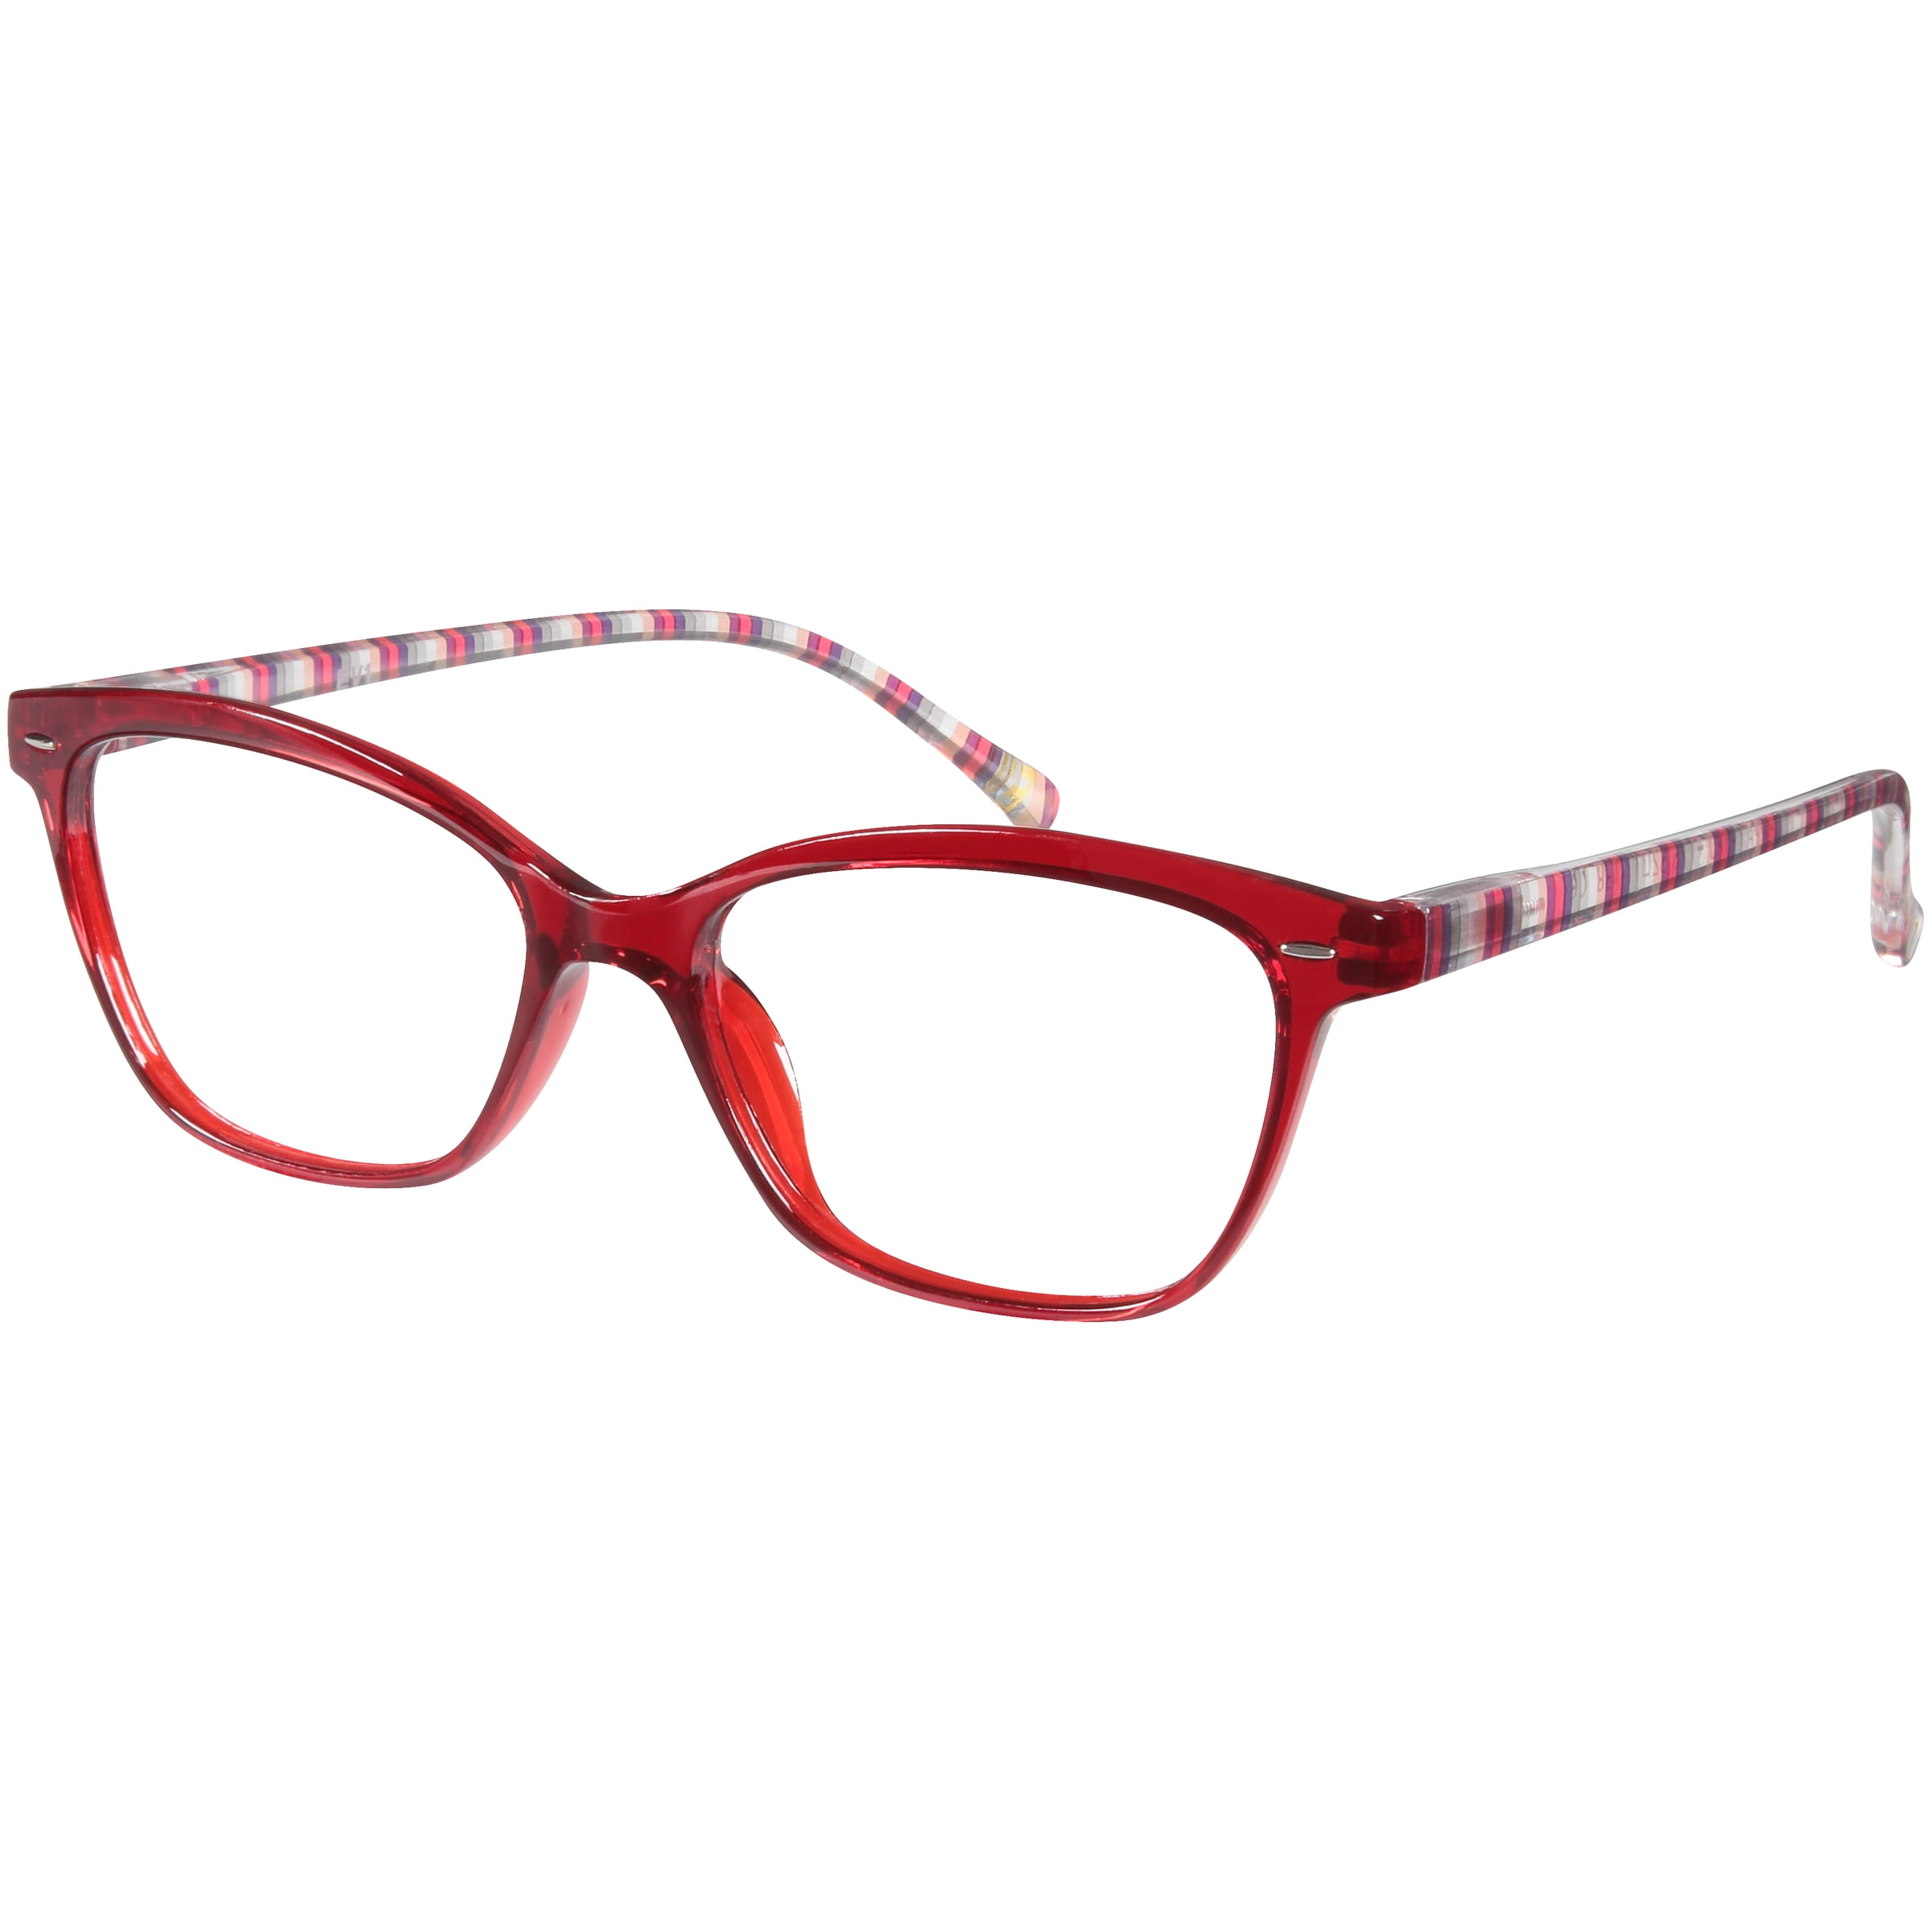 EV1 Pippa Crystal Red +3.00 Reading Glasses Case - Walmart.com